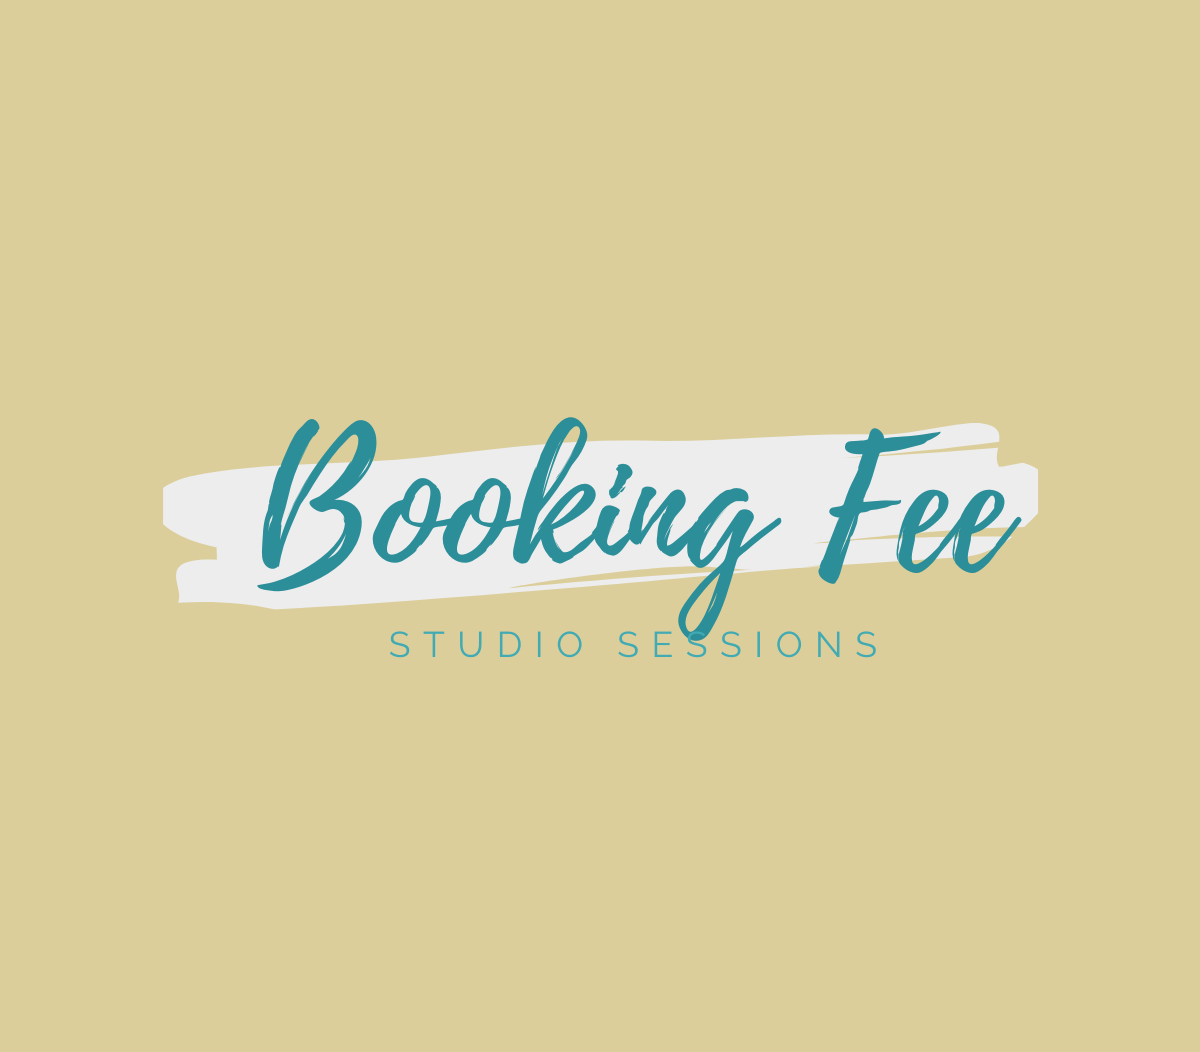 Studio Session-Booking fee